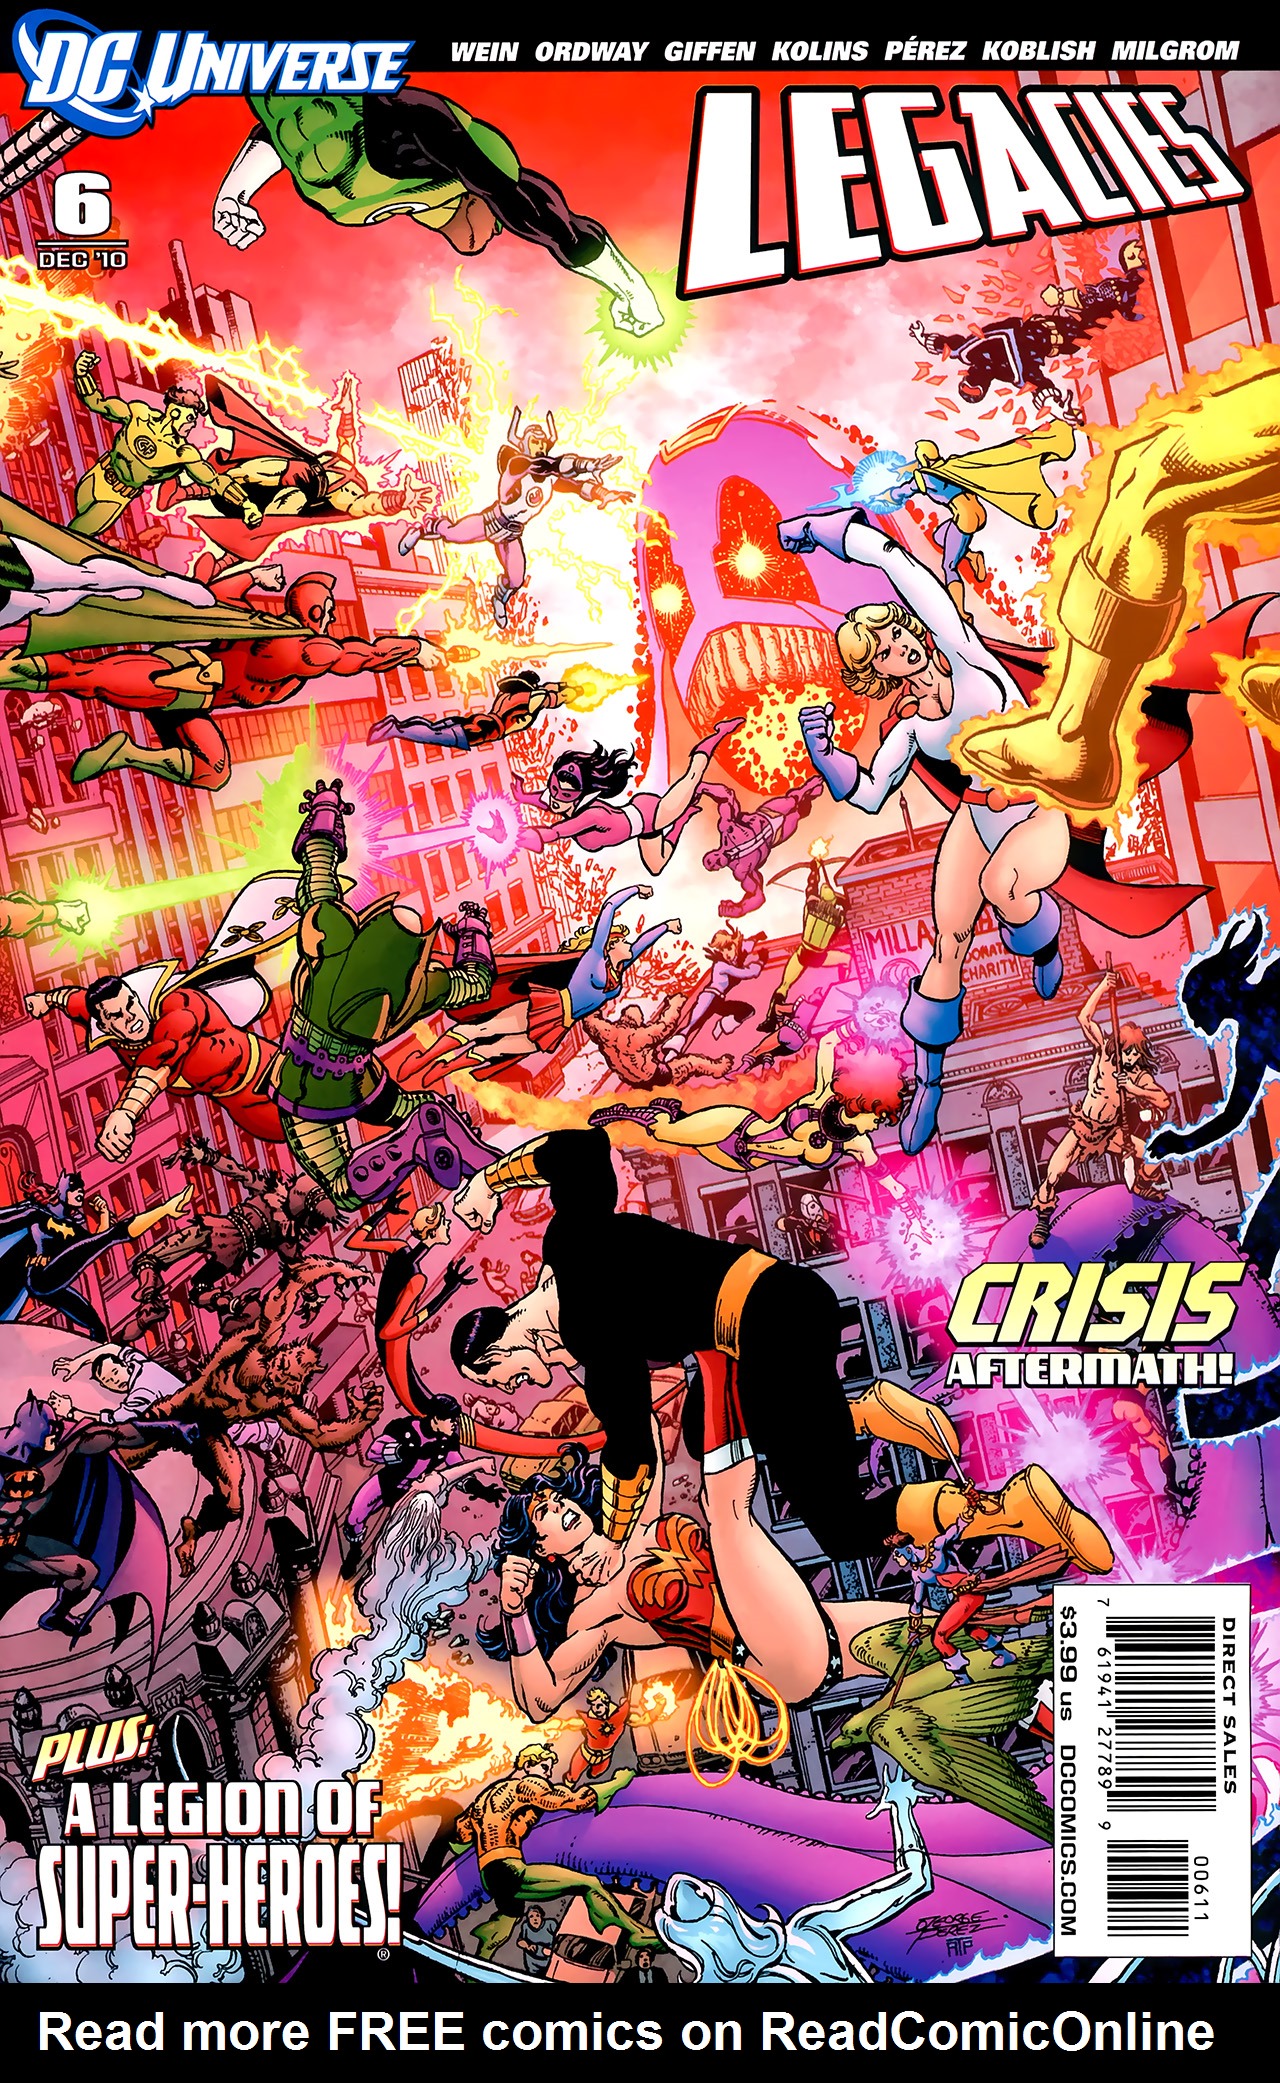 Read online DC Universe: Legacies comic -  Issue #6 - 1